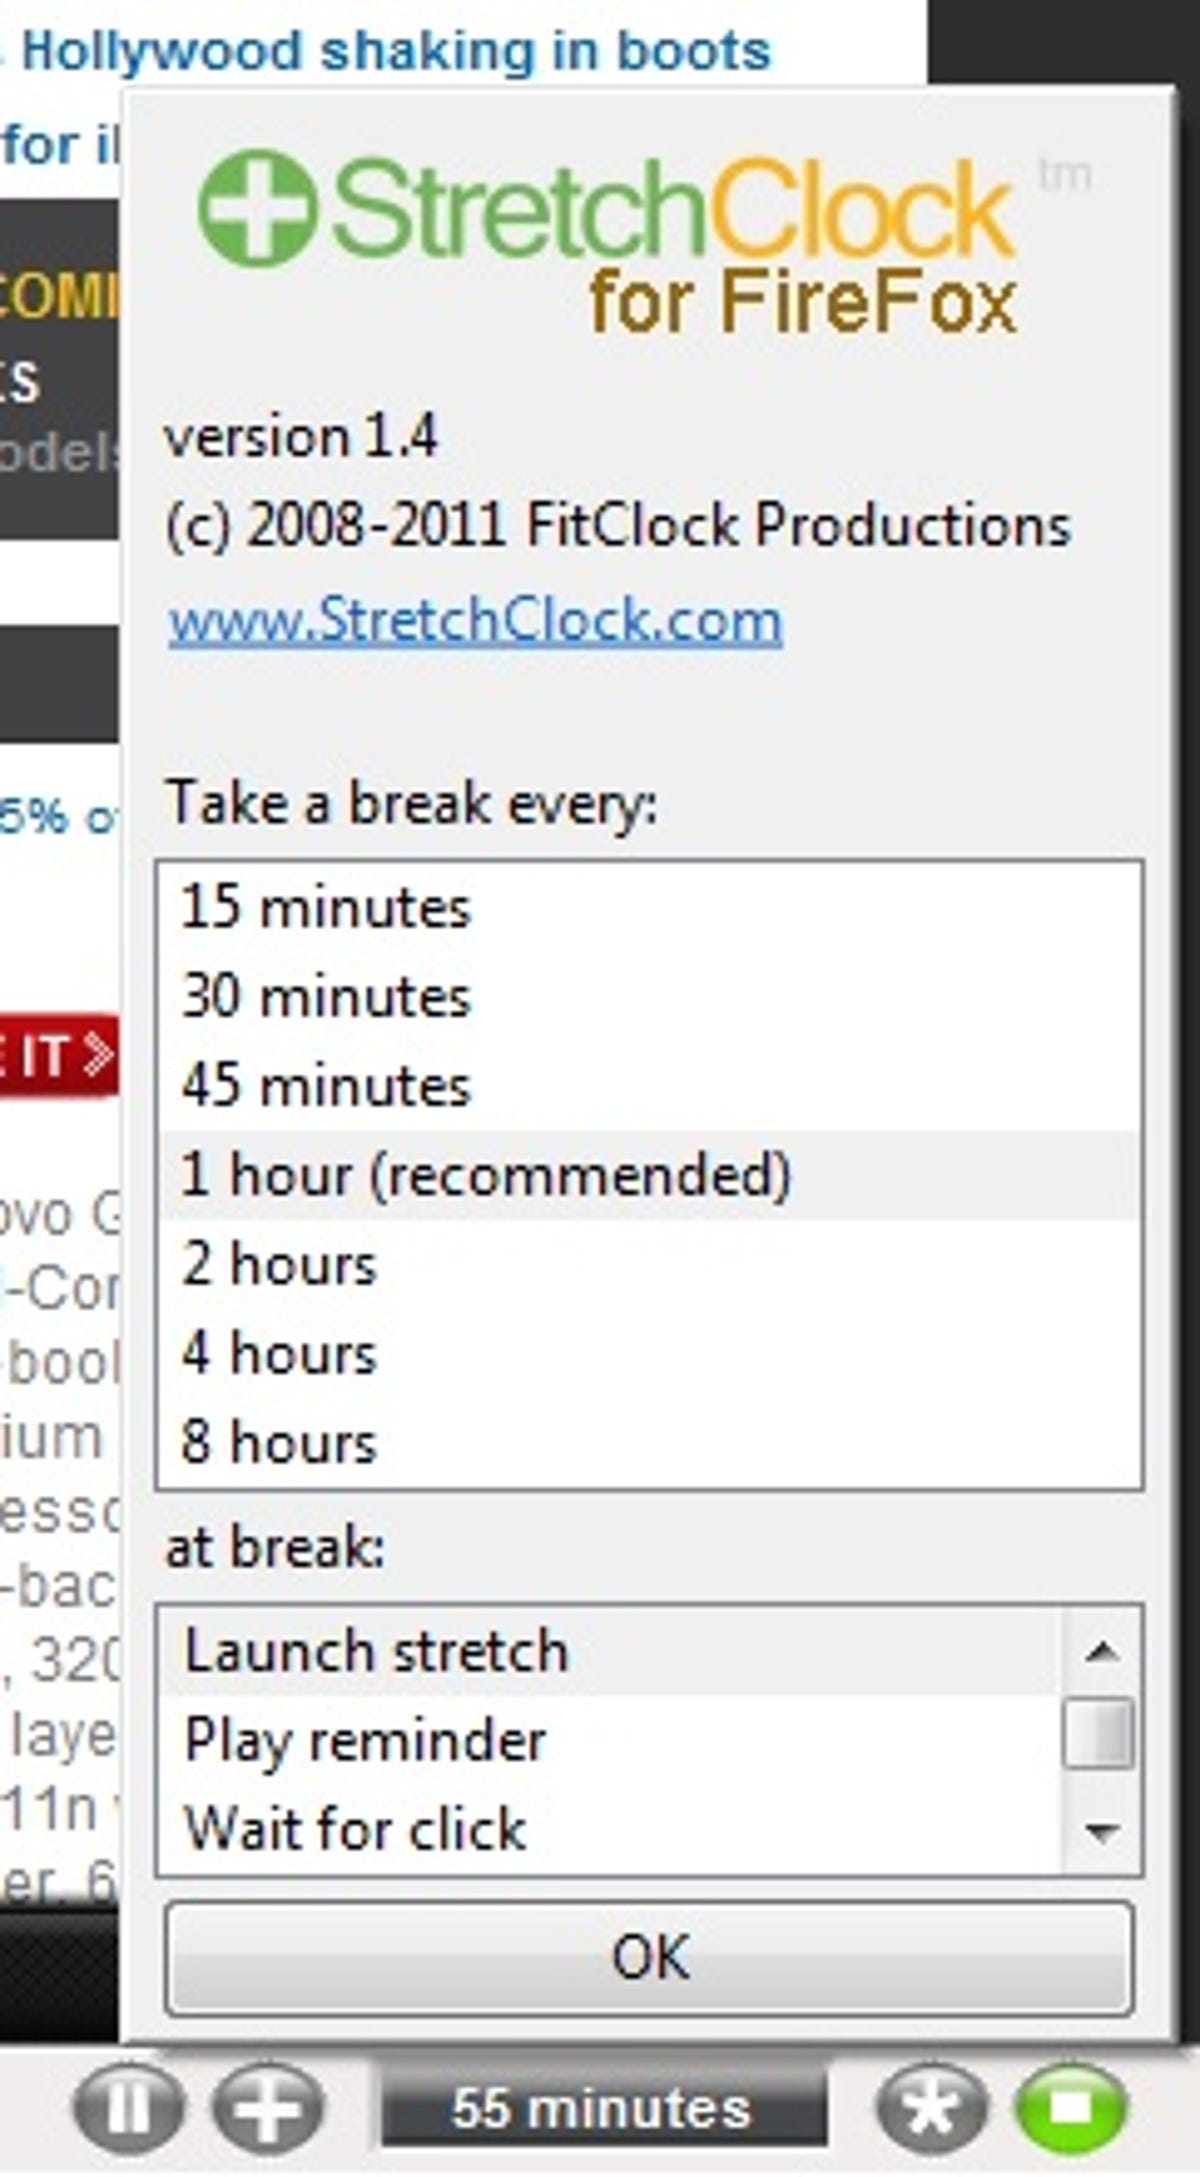 StretchClock for Firefox settings menu